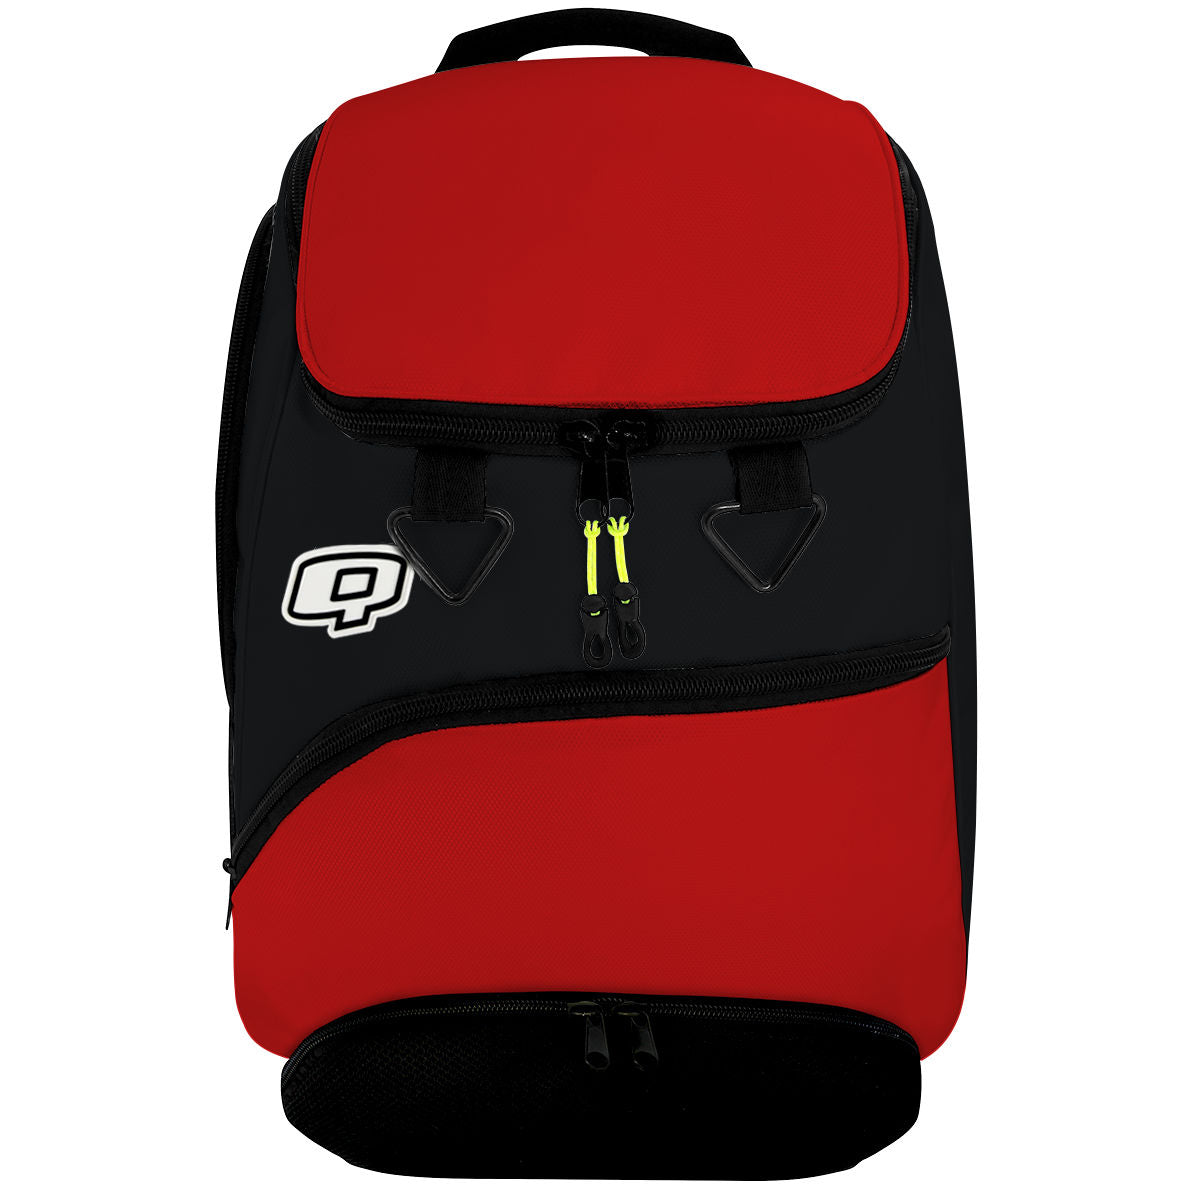 Red Backpack - Back Pack